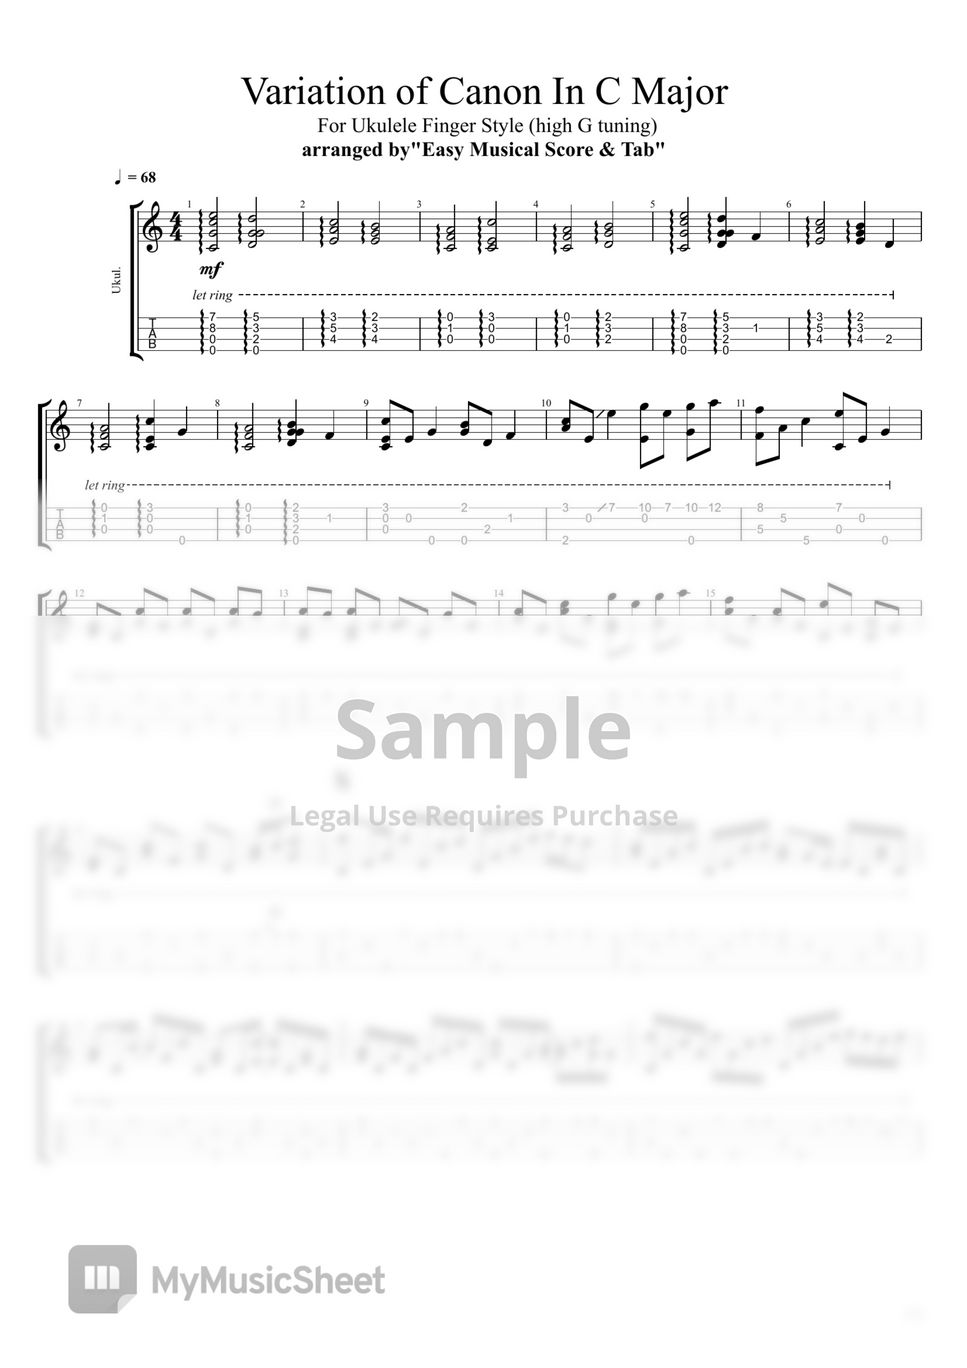 Johann Pachelbel - "Variation of Canon" In C for Ukulele Finger Style (high G tuning) by EMST